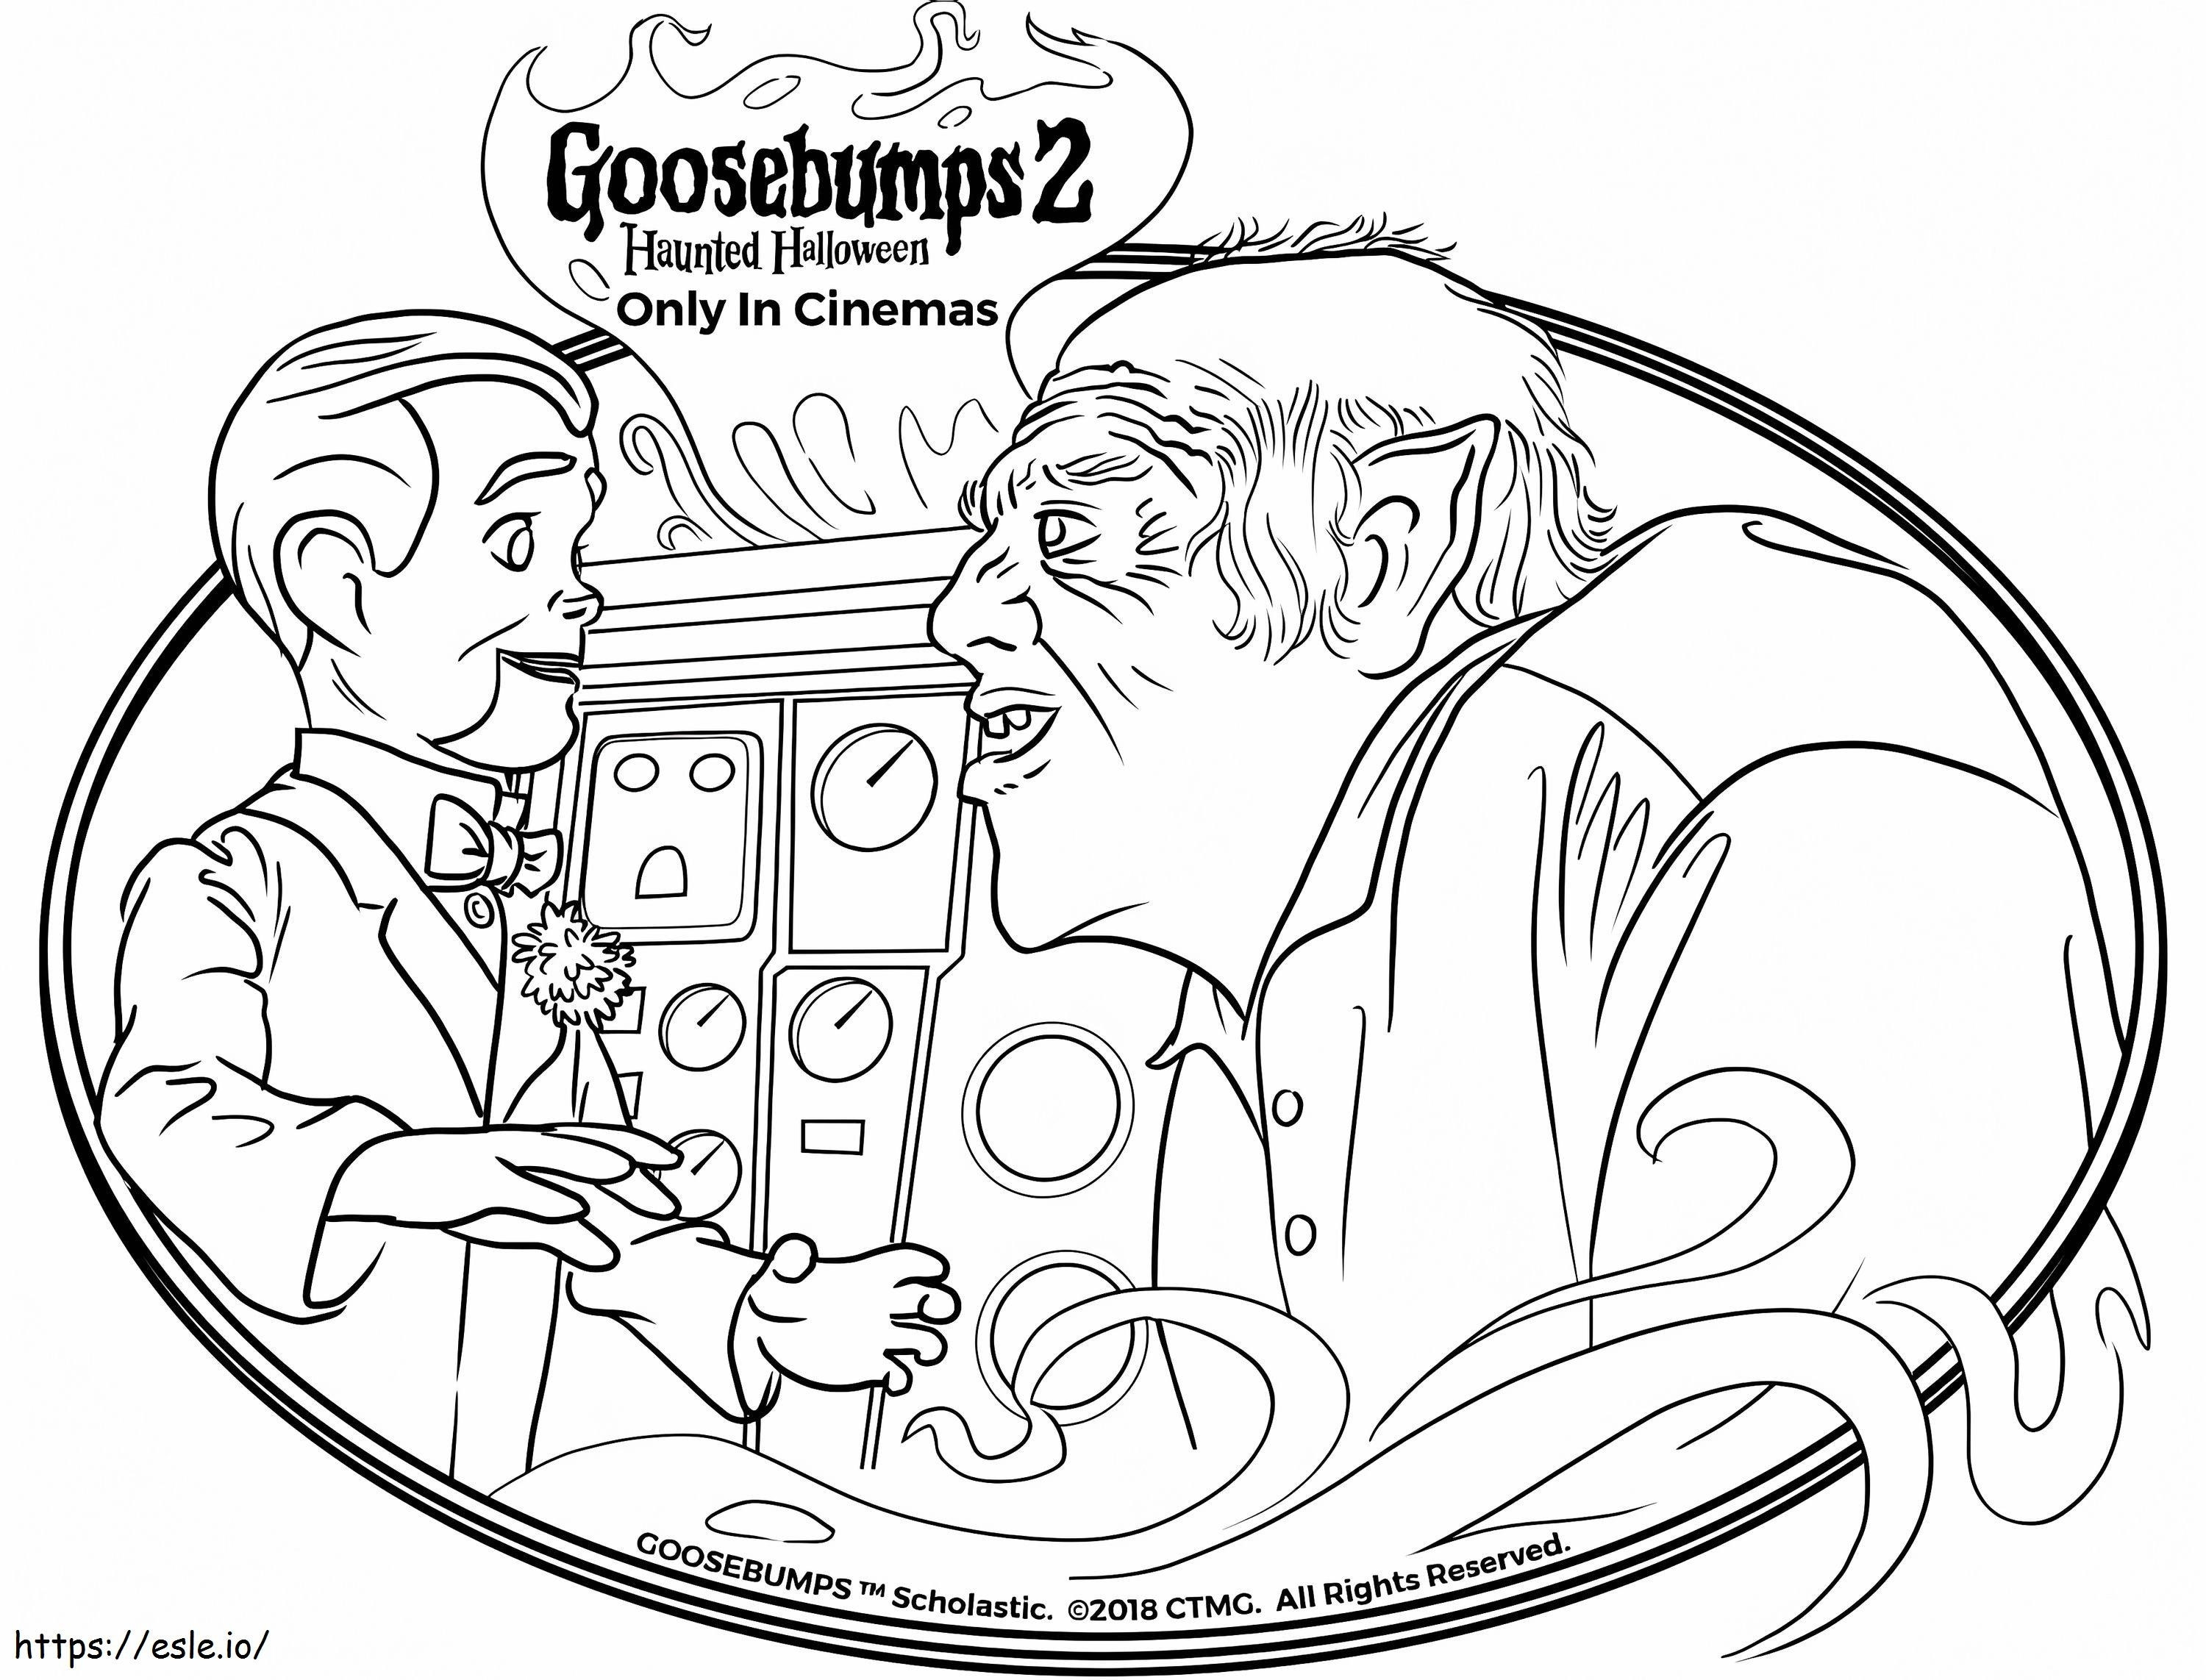 Goosebumps 1 coloring page